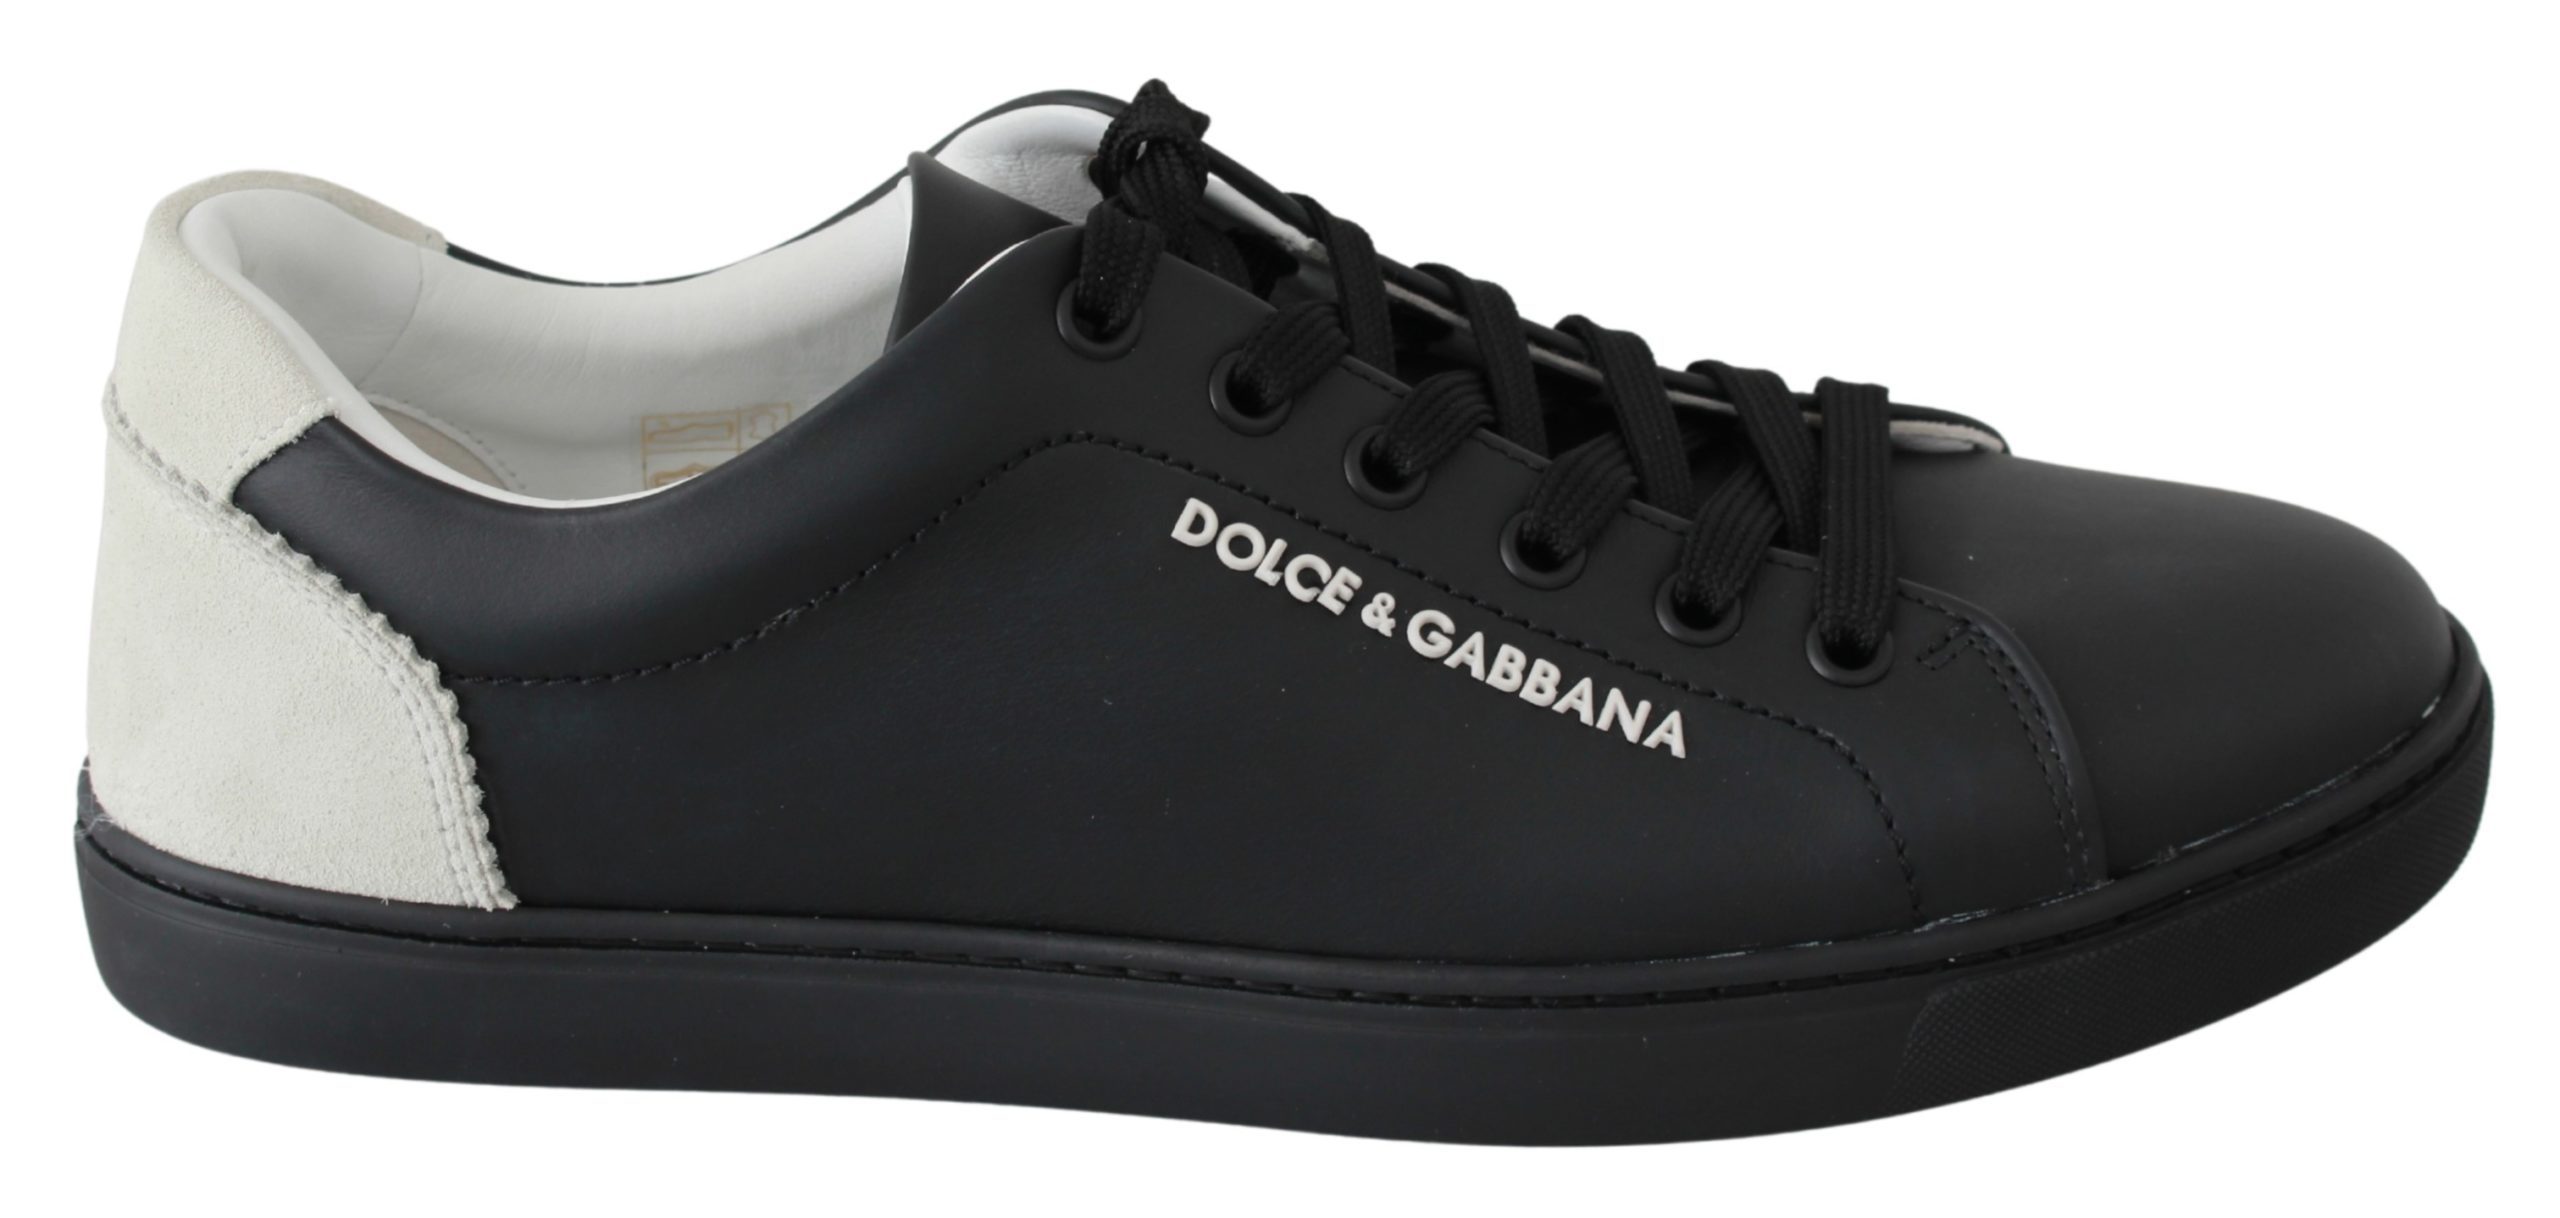 Dolce & Gabbana Women's Leather Low Top Trainer Multicolor LA6532 - EU35/US4.5